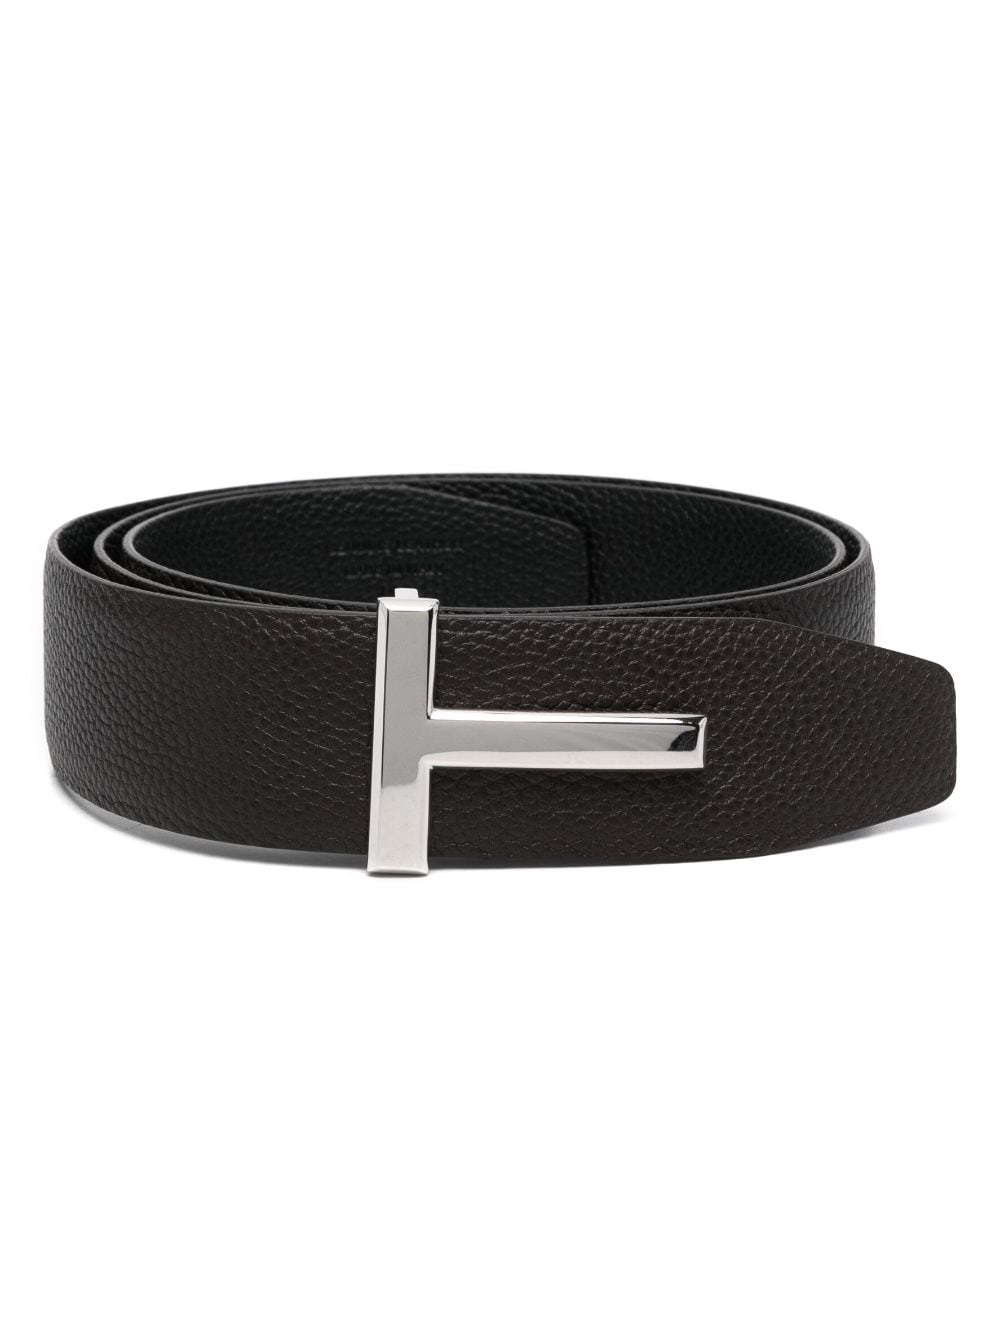 T-buckle reversible leather belt - 1